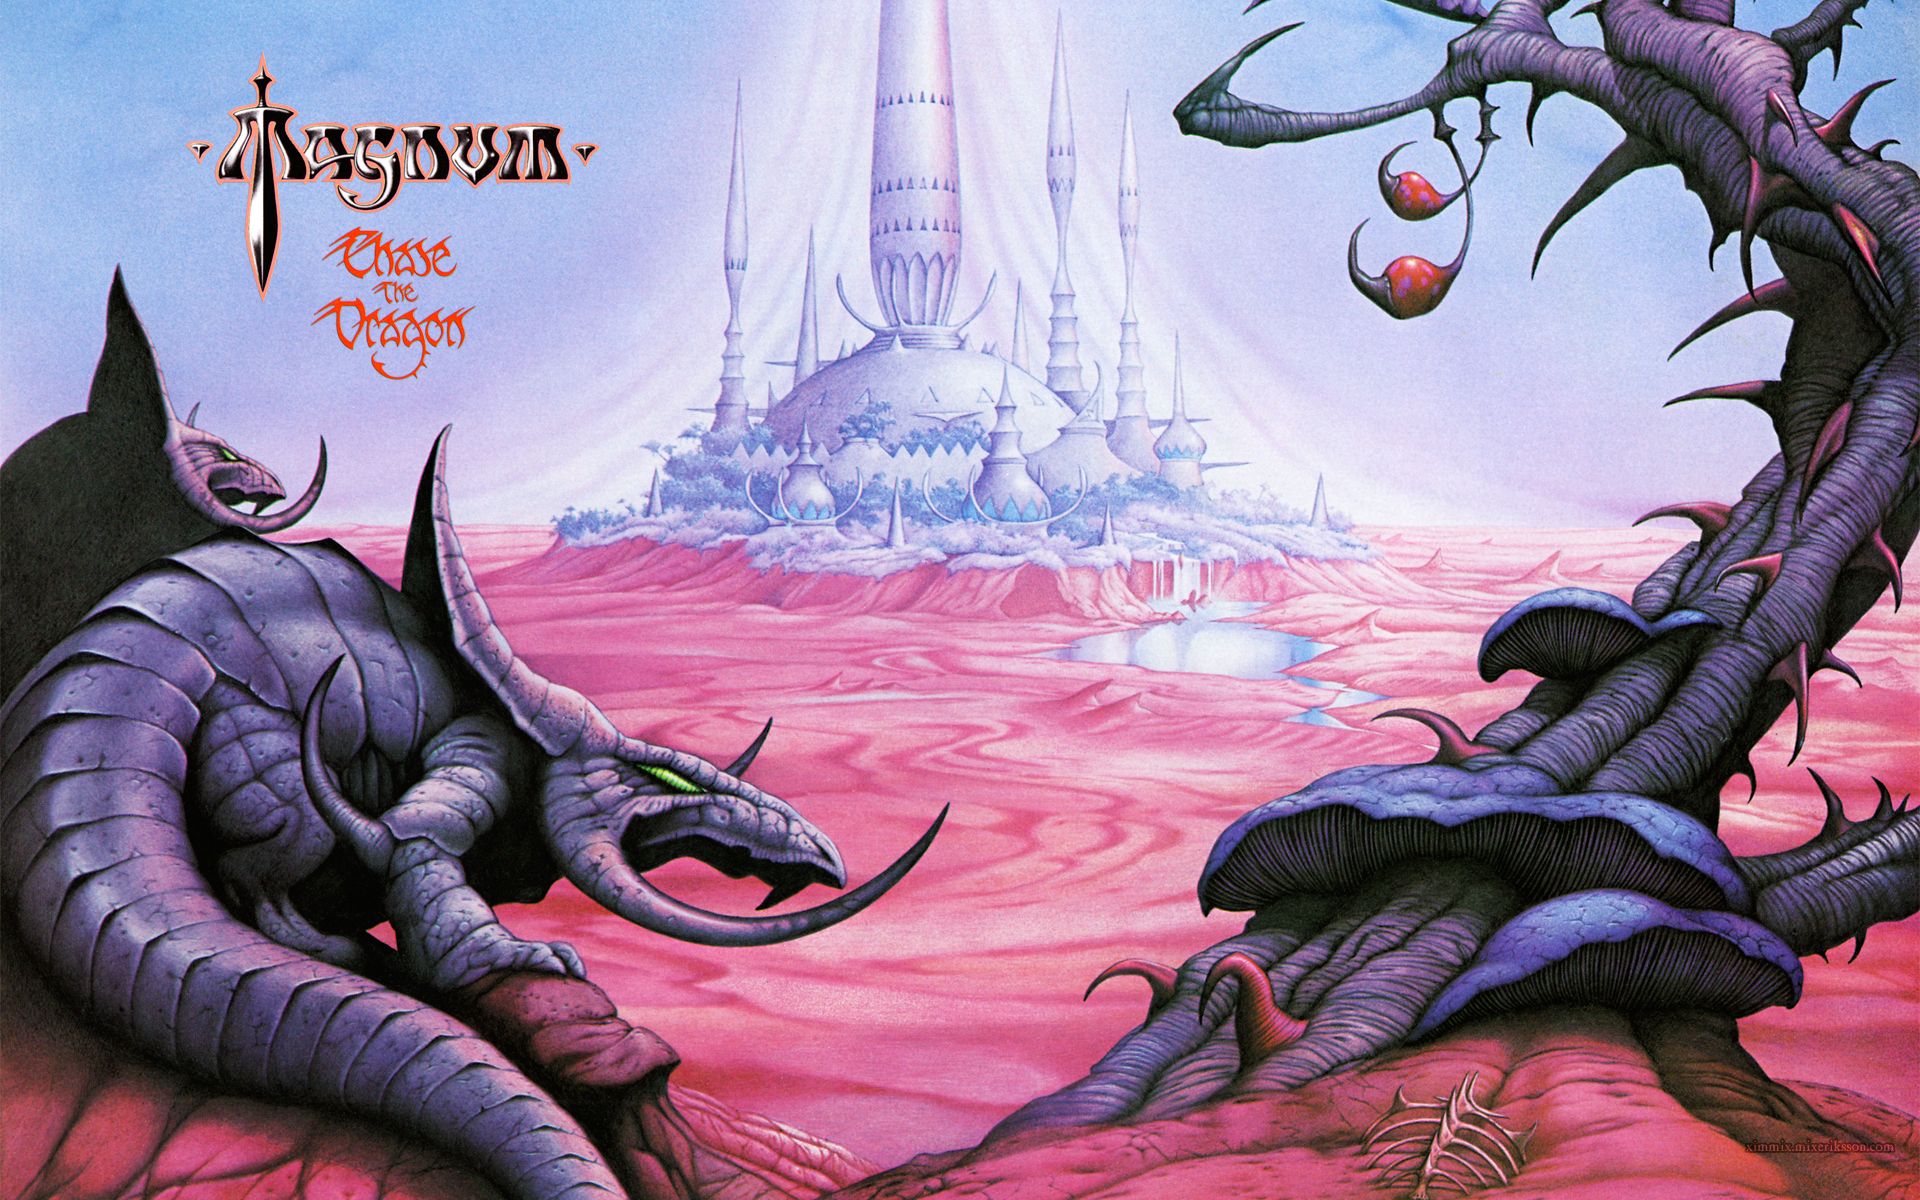 Heavy Metal Metal Hard Rock Dragon Fantasy Album Cover Castle Wallpaper:1920x1200